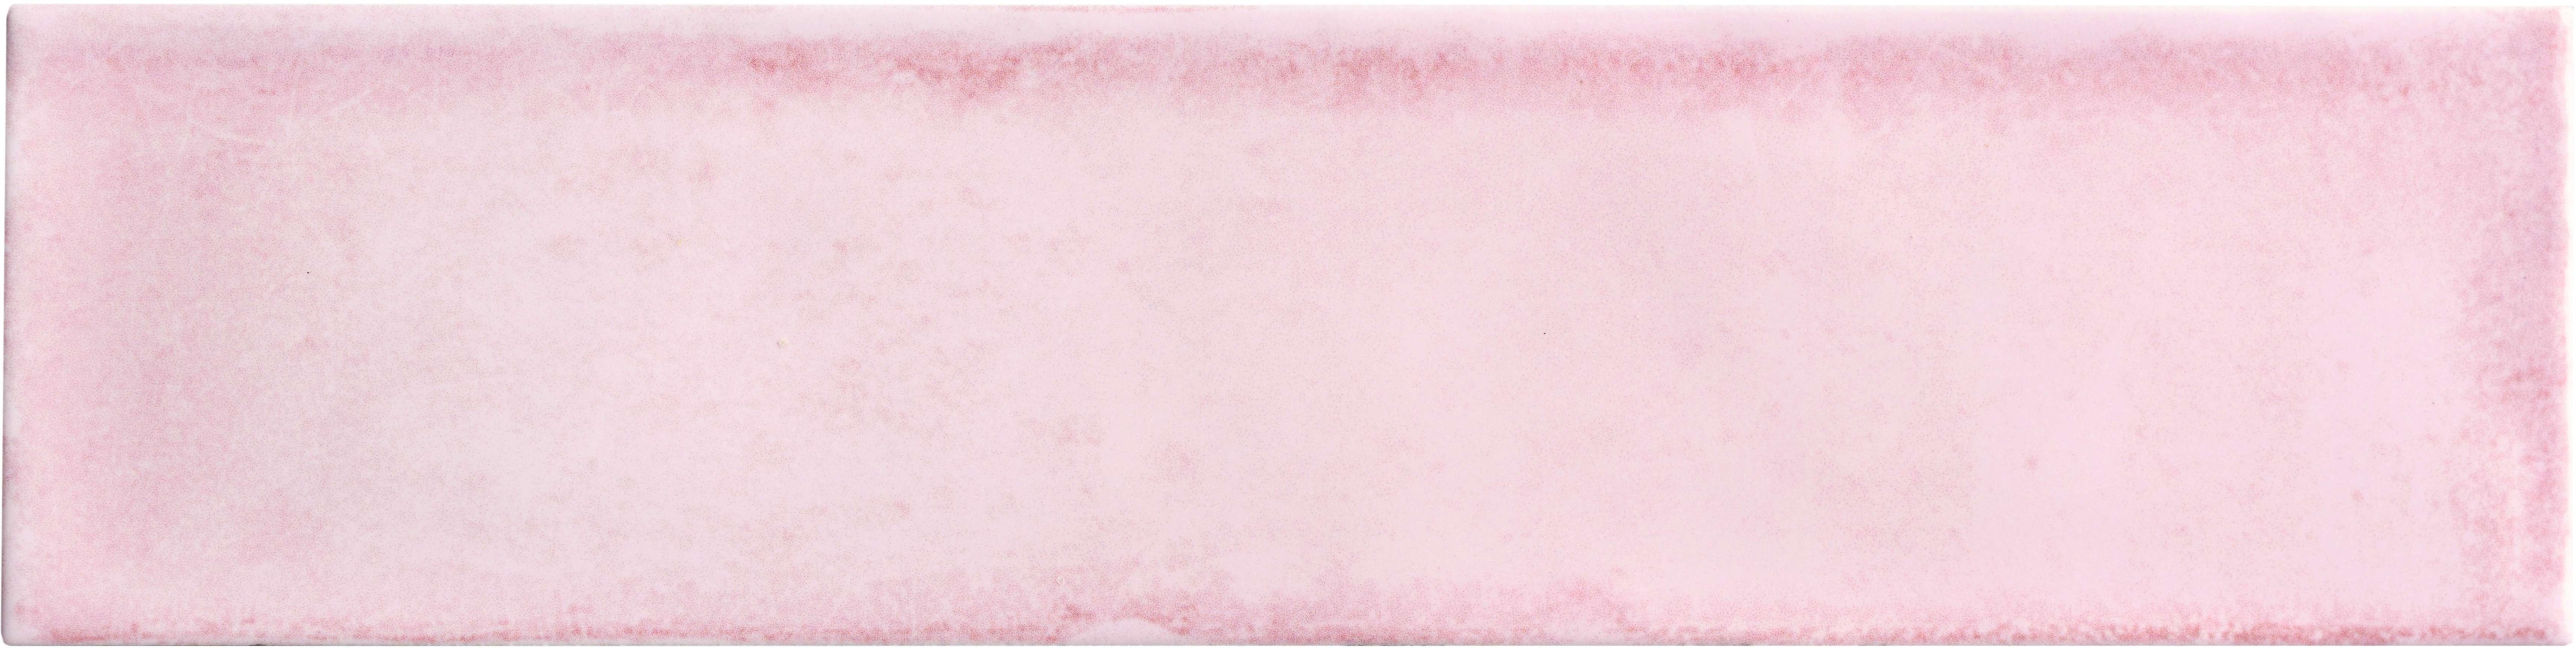 Original Style Tileworks Montblanc Pink Tile 7.5x30cm